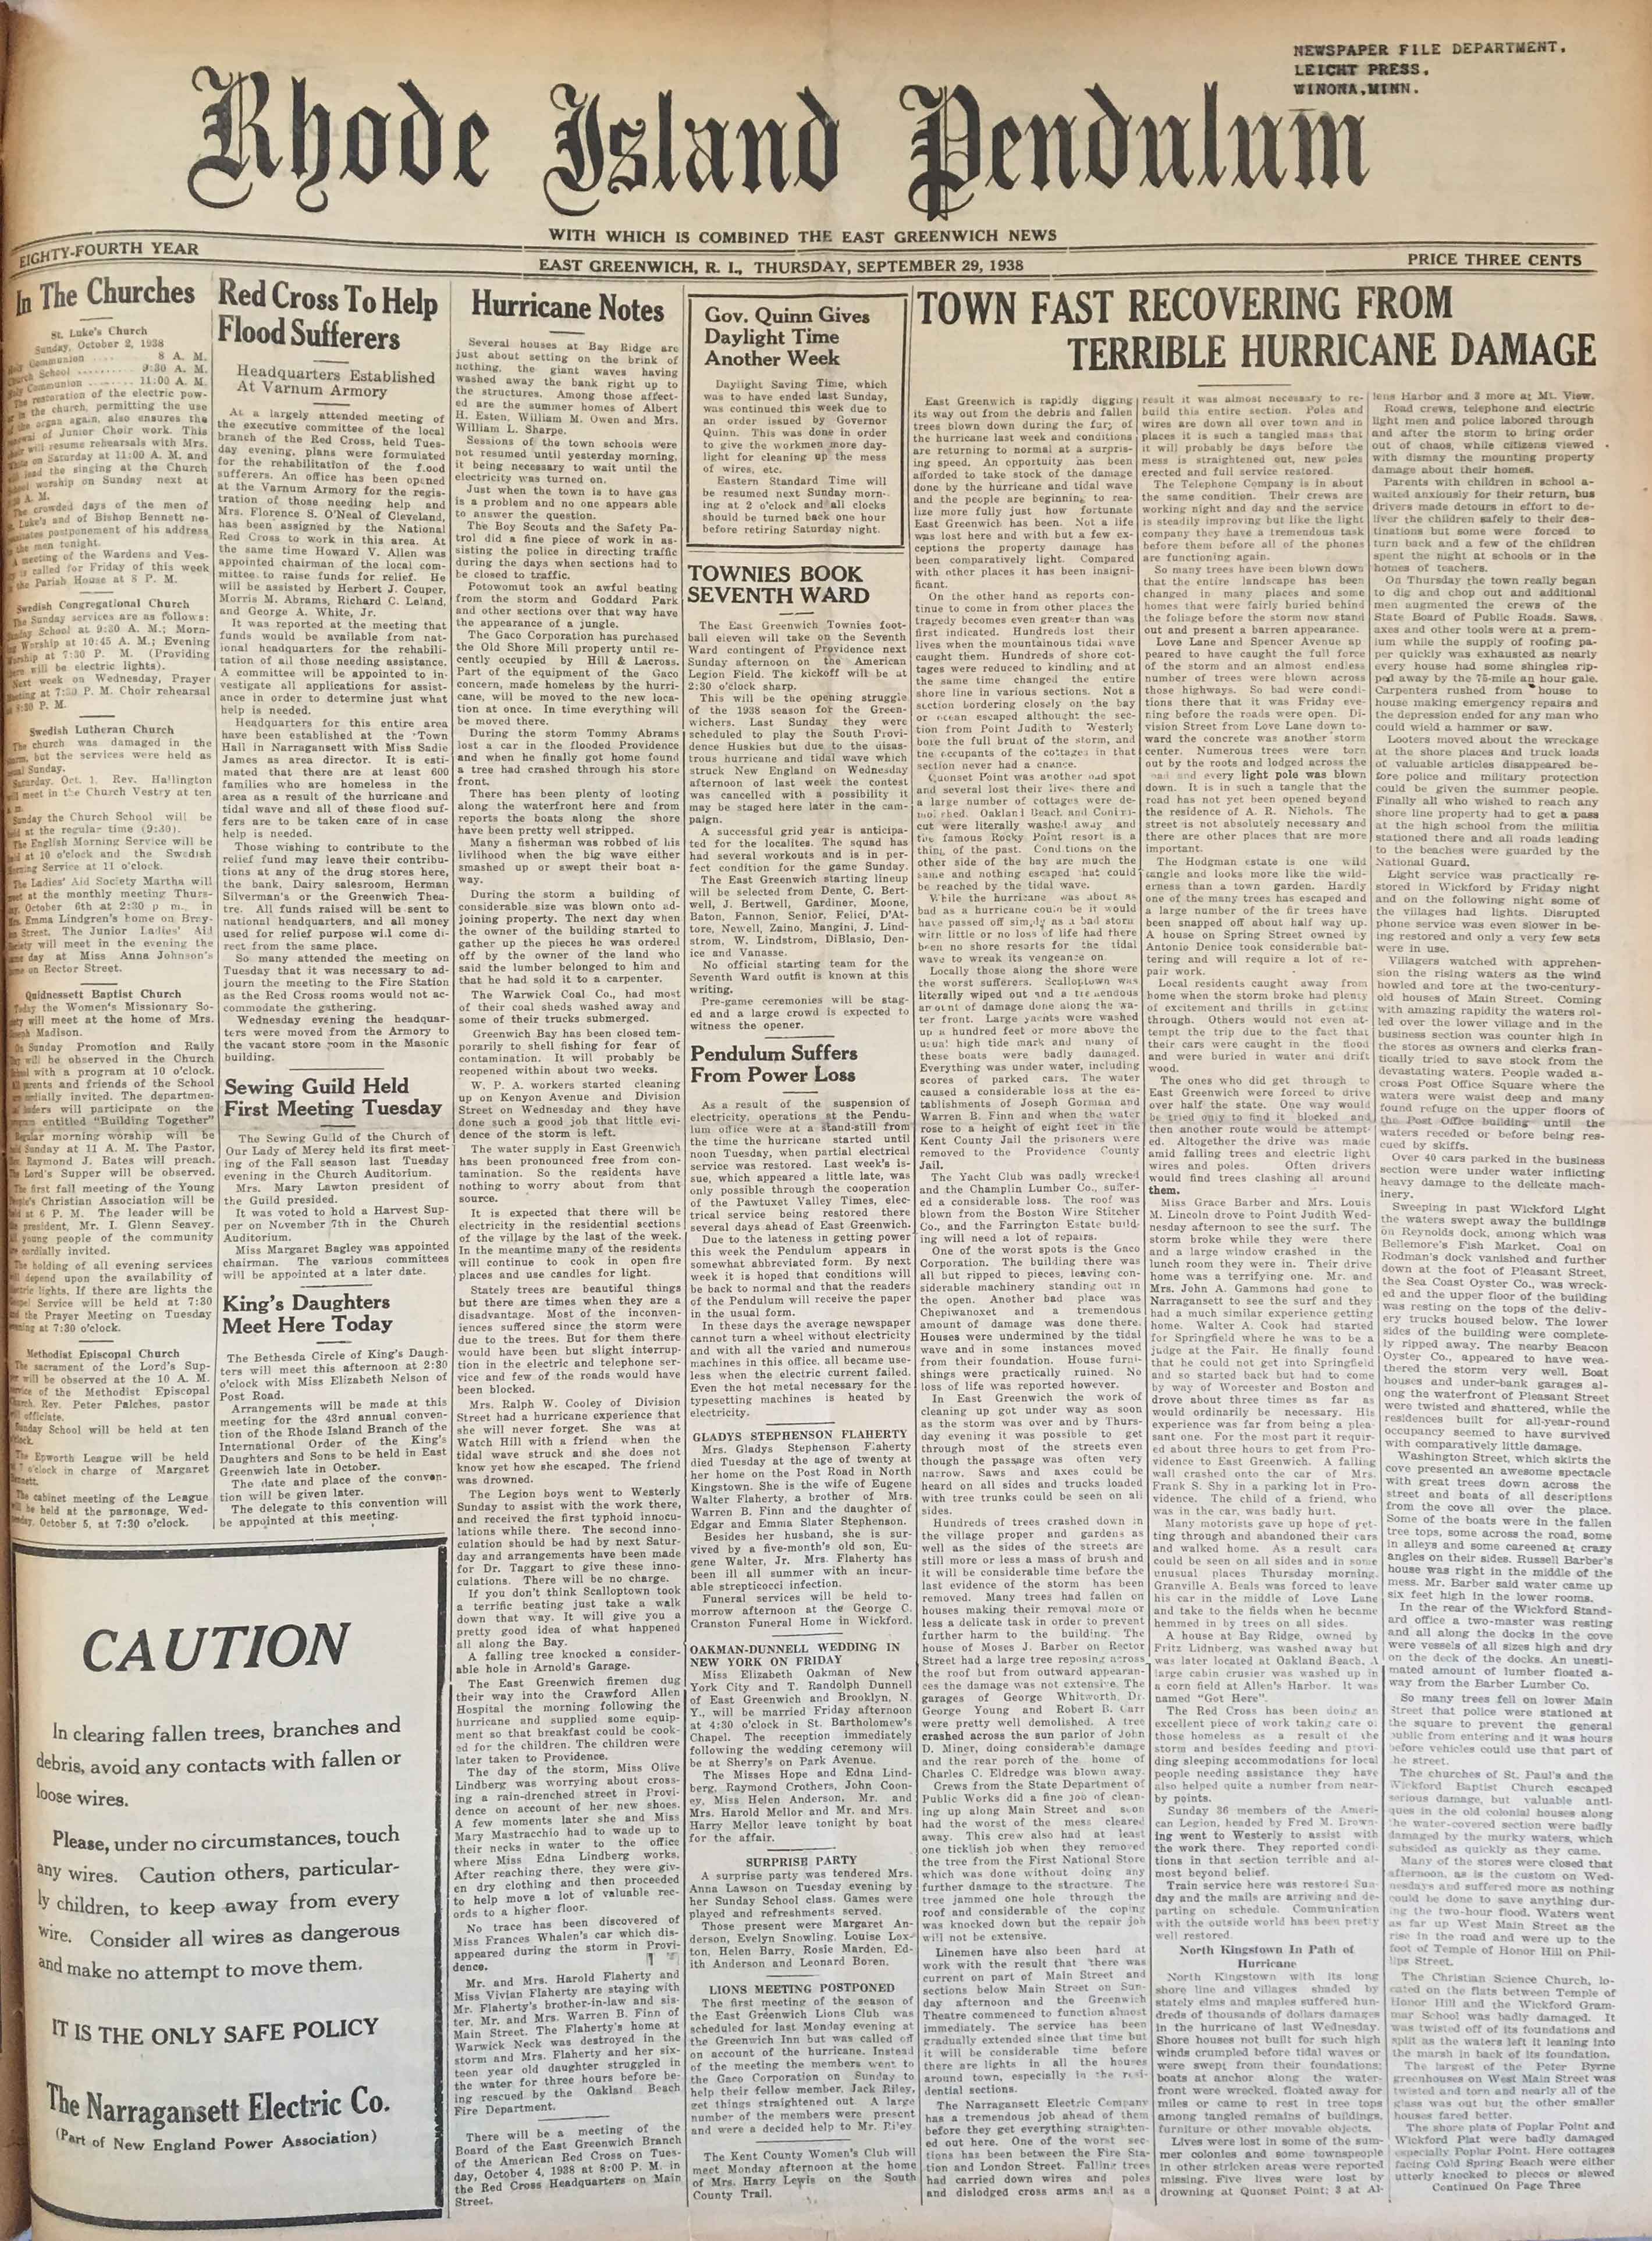  Rhode Island Pendulum Front Page published September 29, 1938